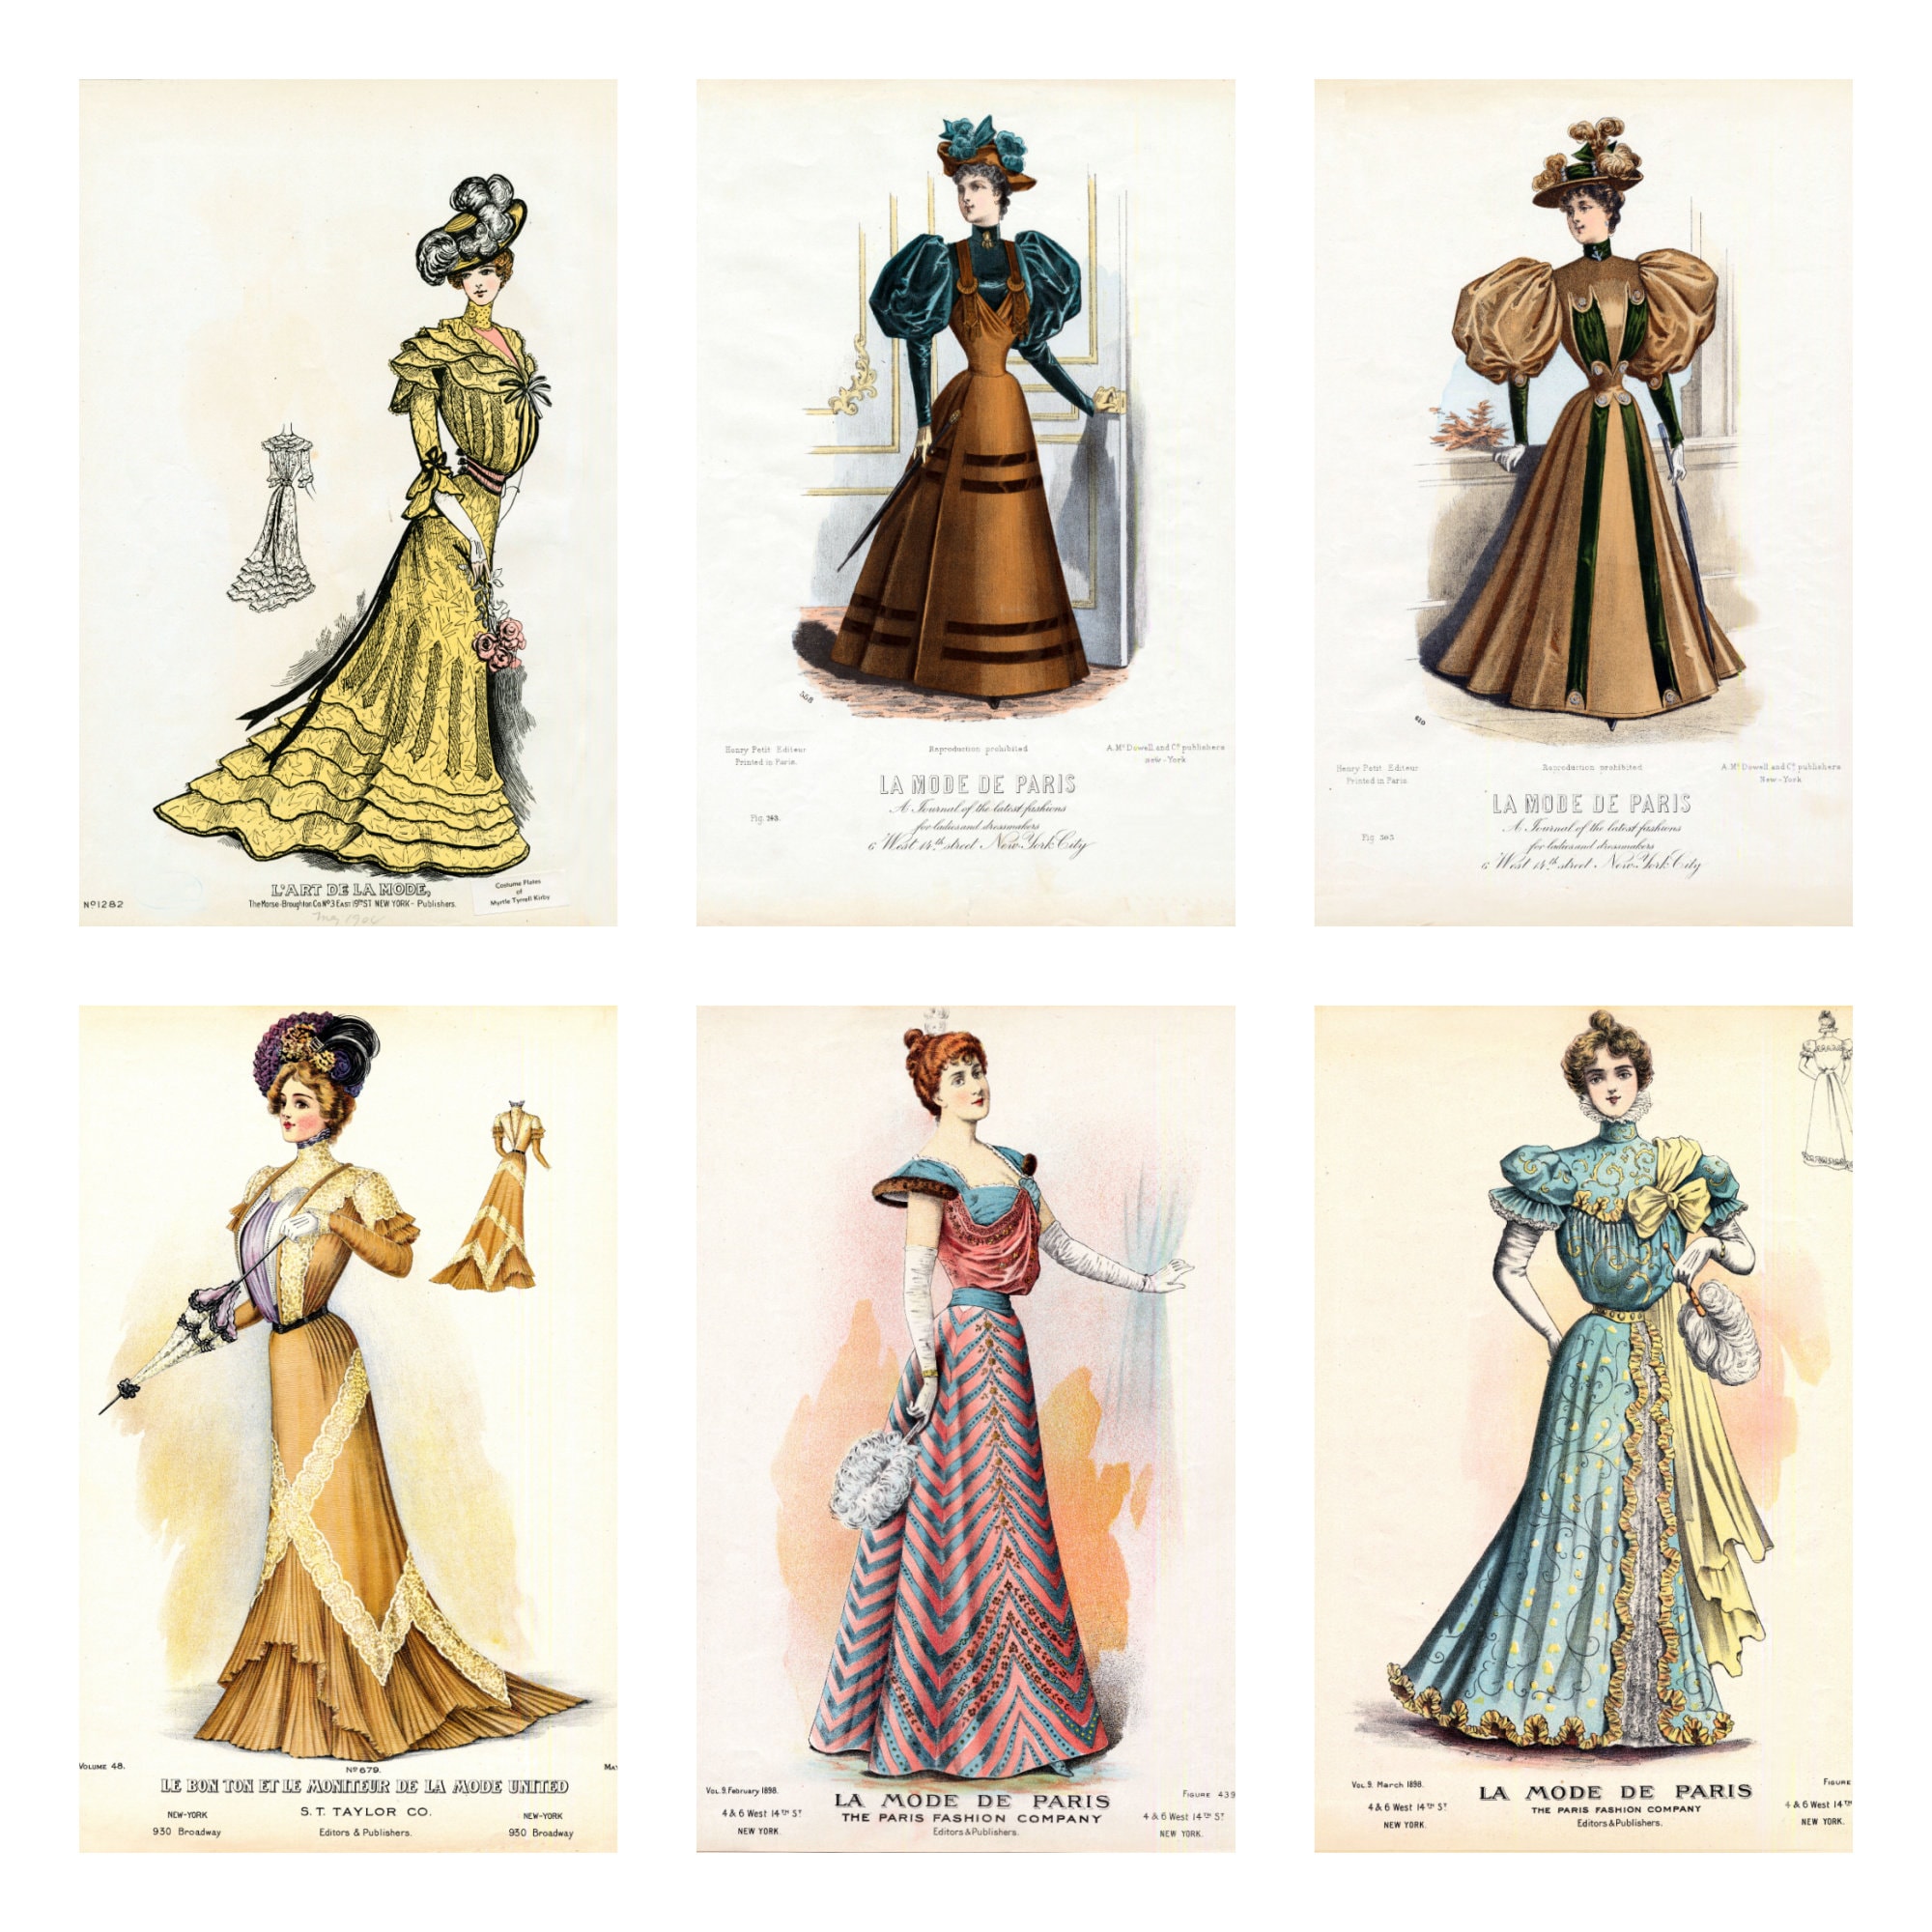 1800s england fashion